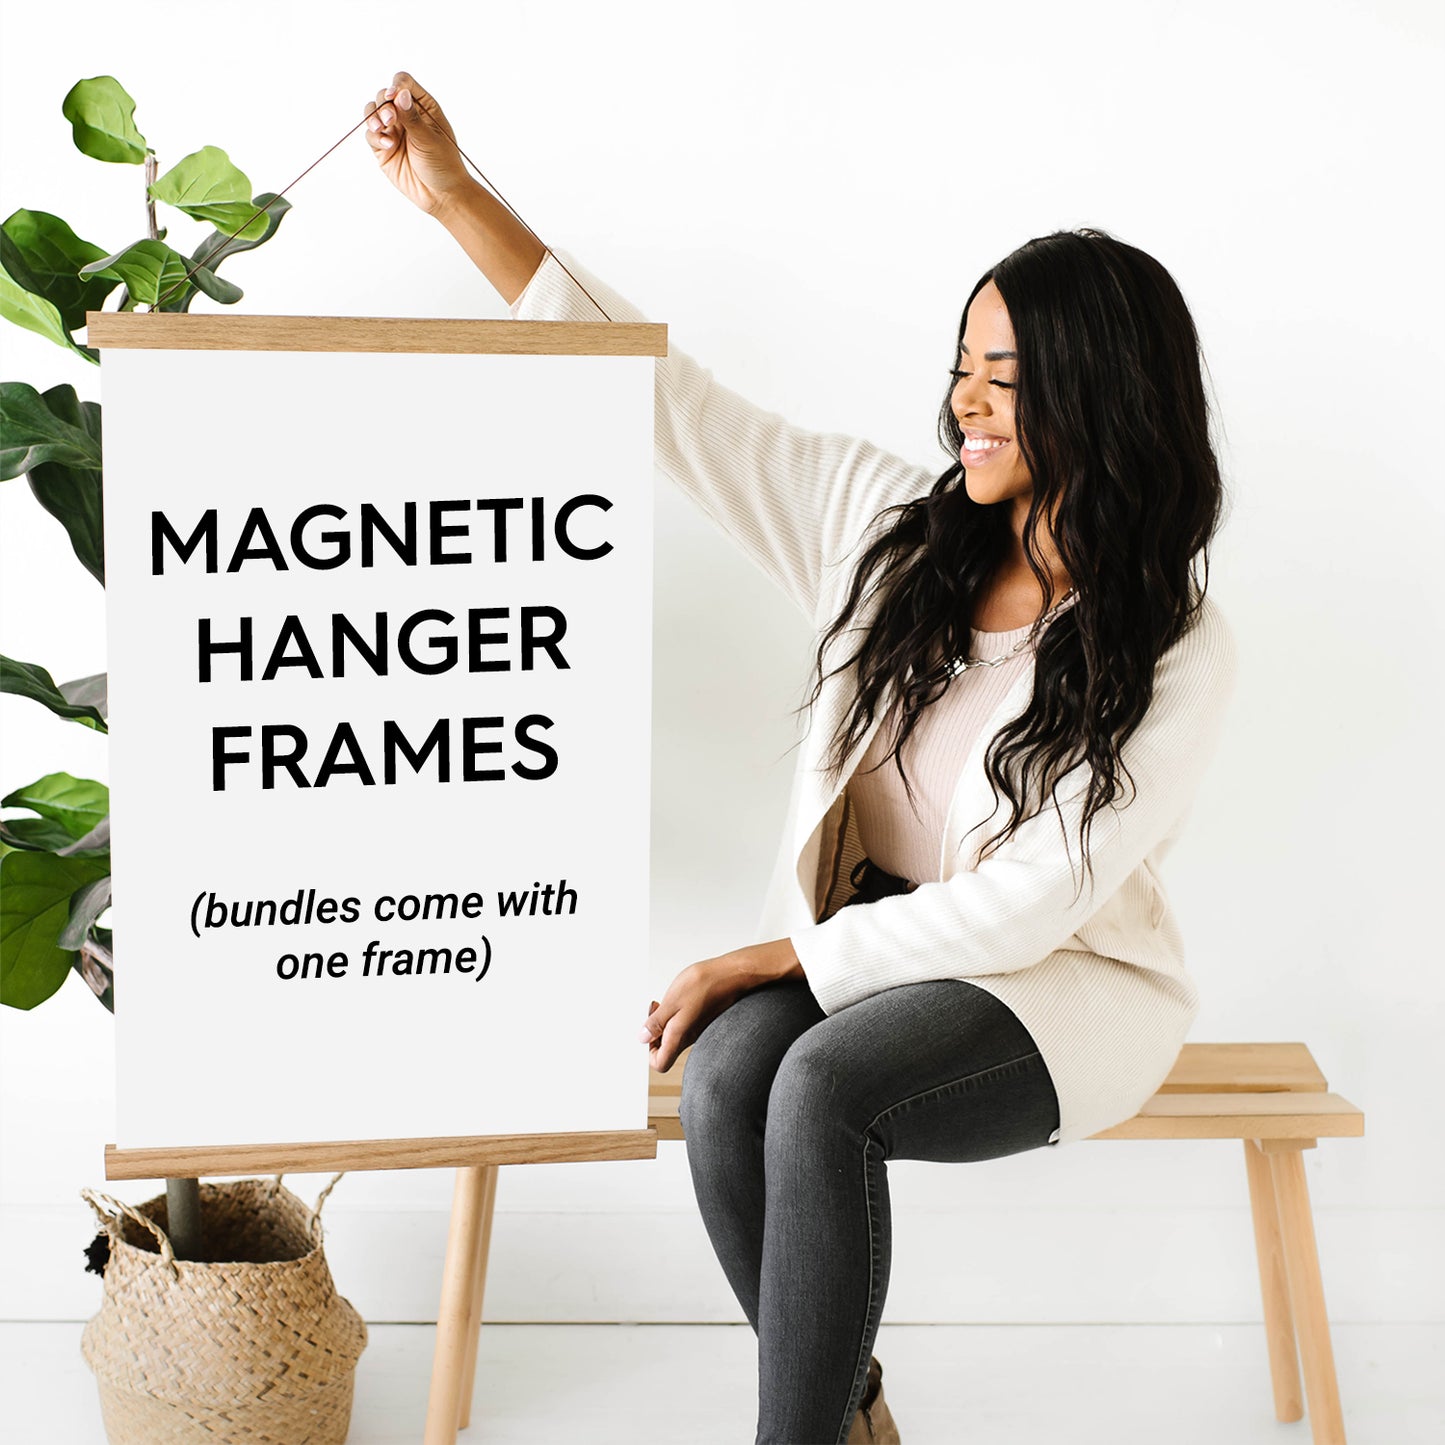 20x30" Canvas Bundle - Pack of 5 Painting Canvases and Magnetic Wood Hanger Frame - Hanger Frames